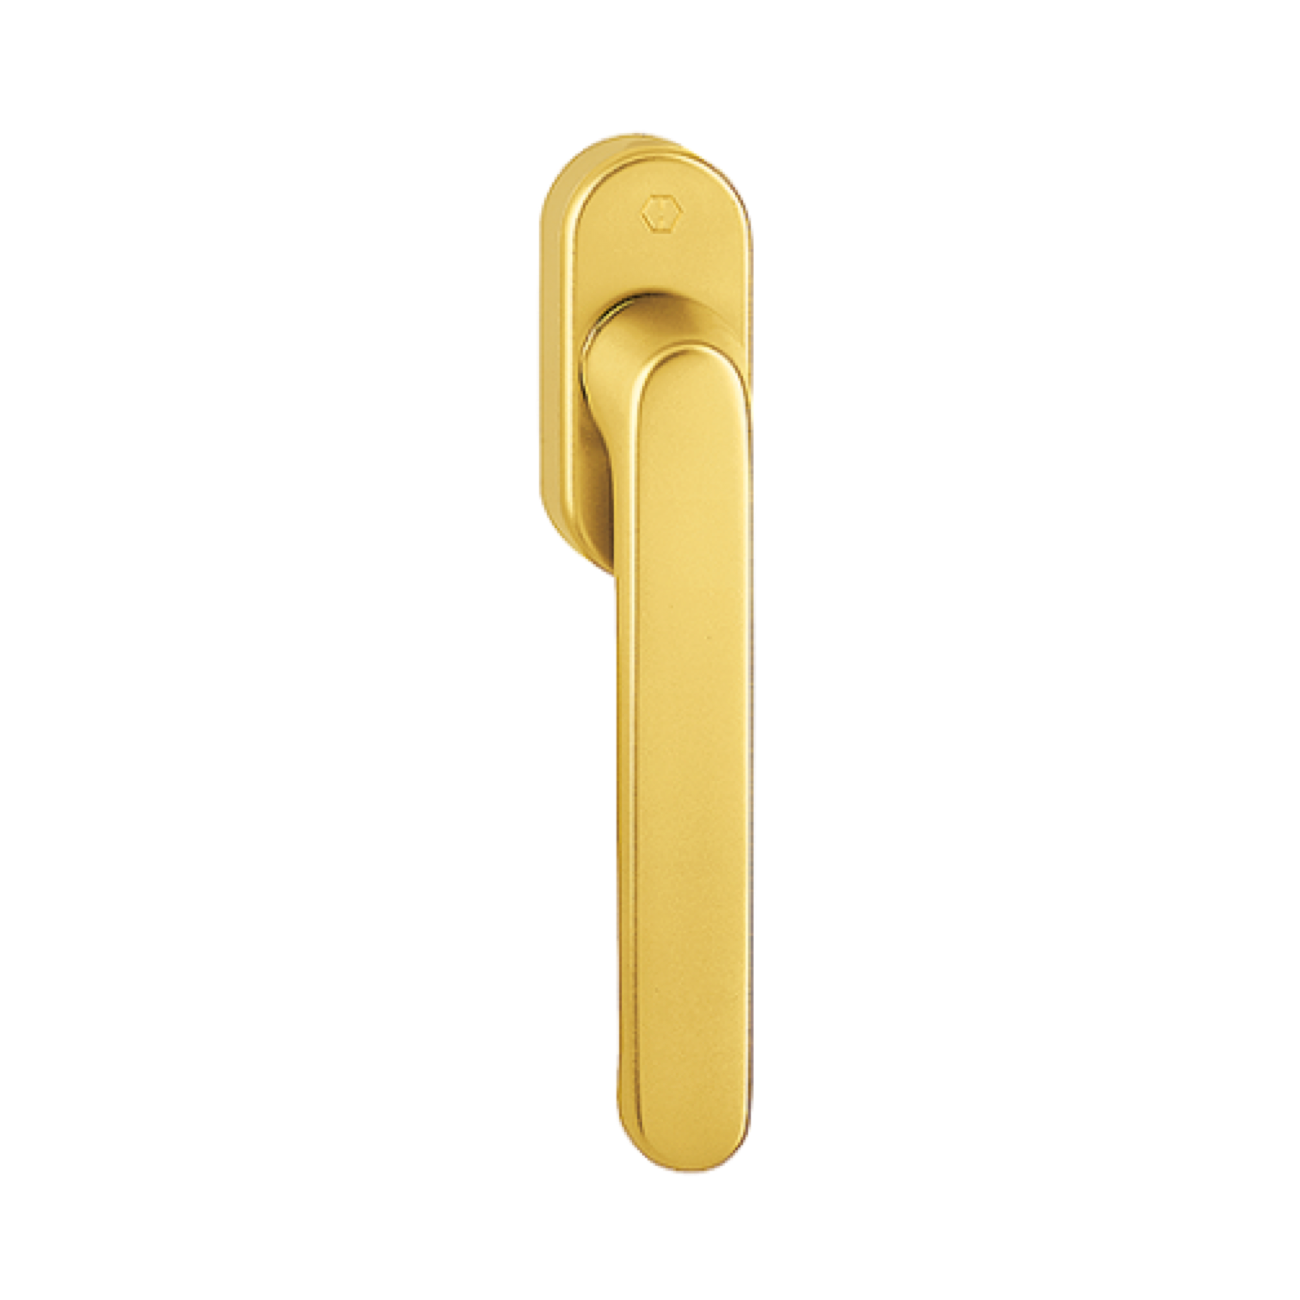 Manilla Luxemburgo en dorado marca Hoppe con cuello corto para ventana oscilobatiente